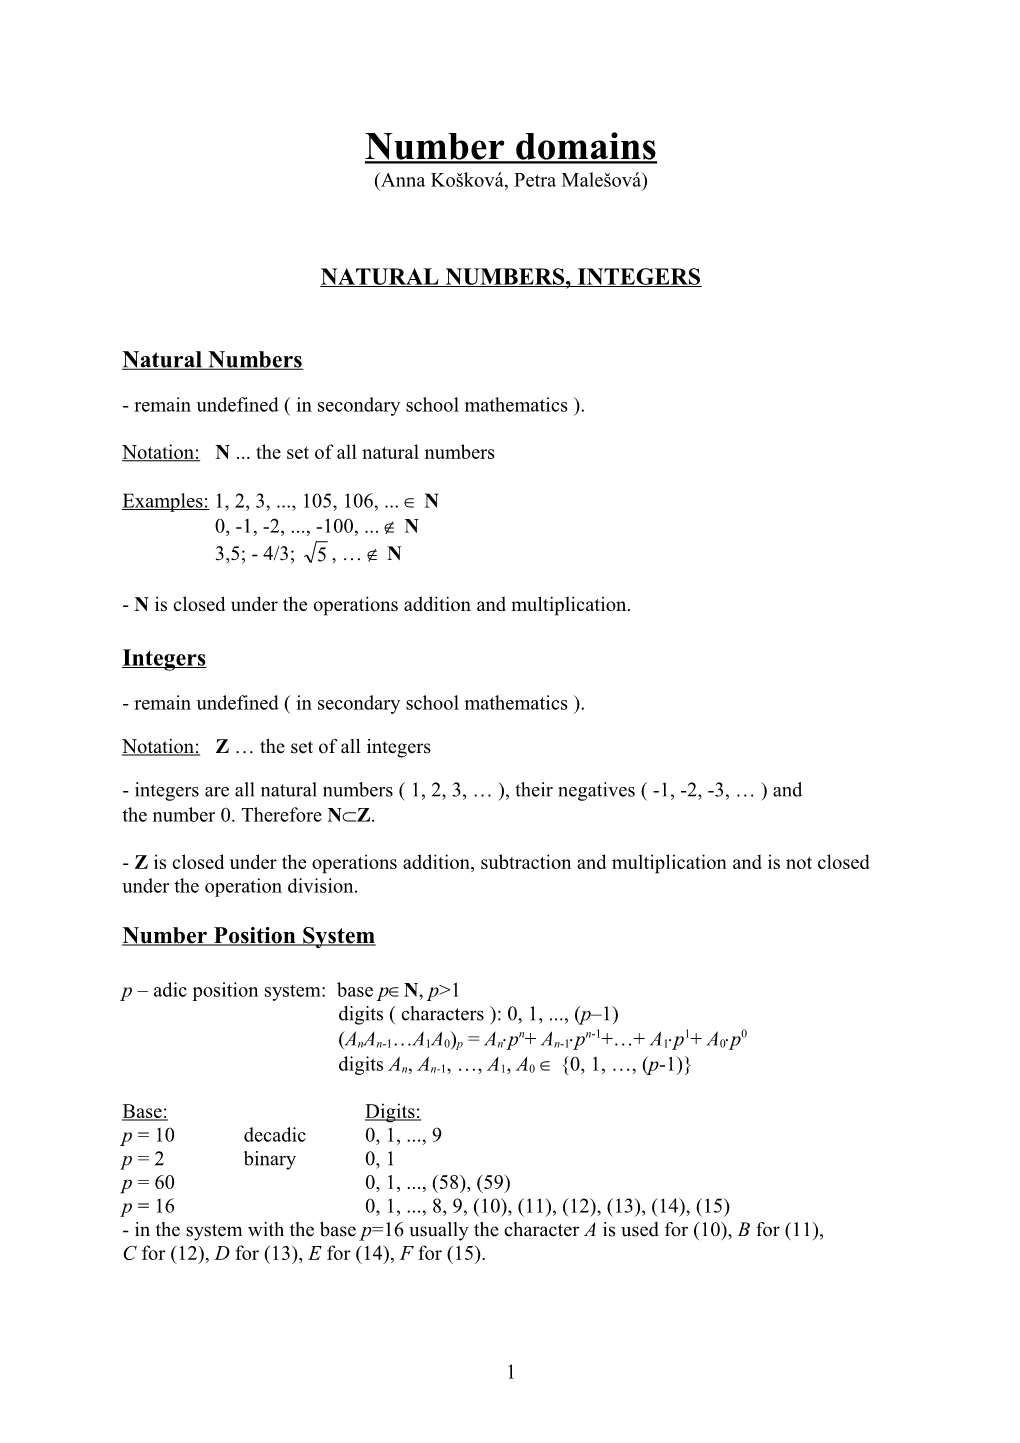 Natural Numbers, Integers